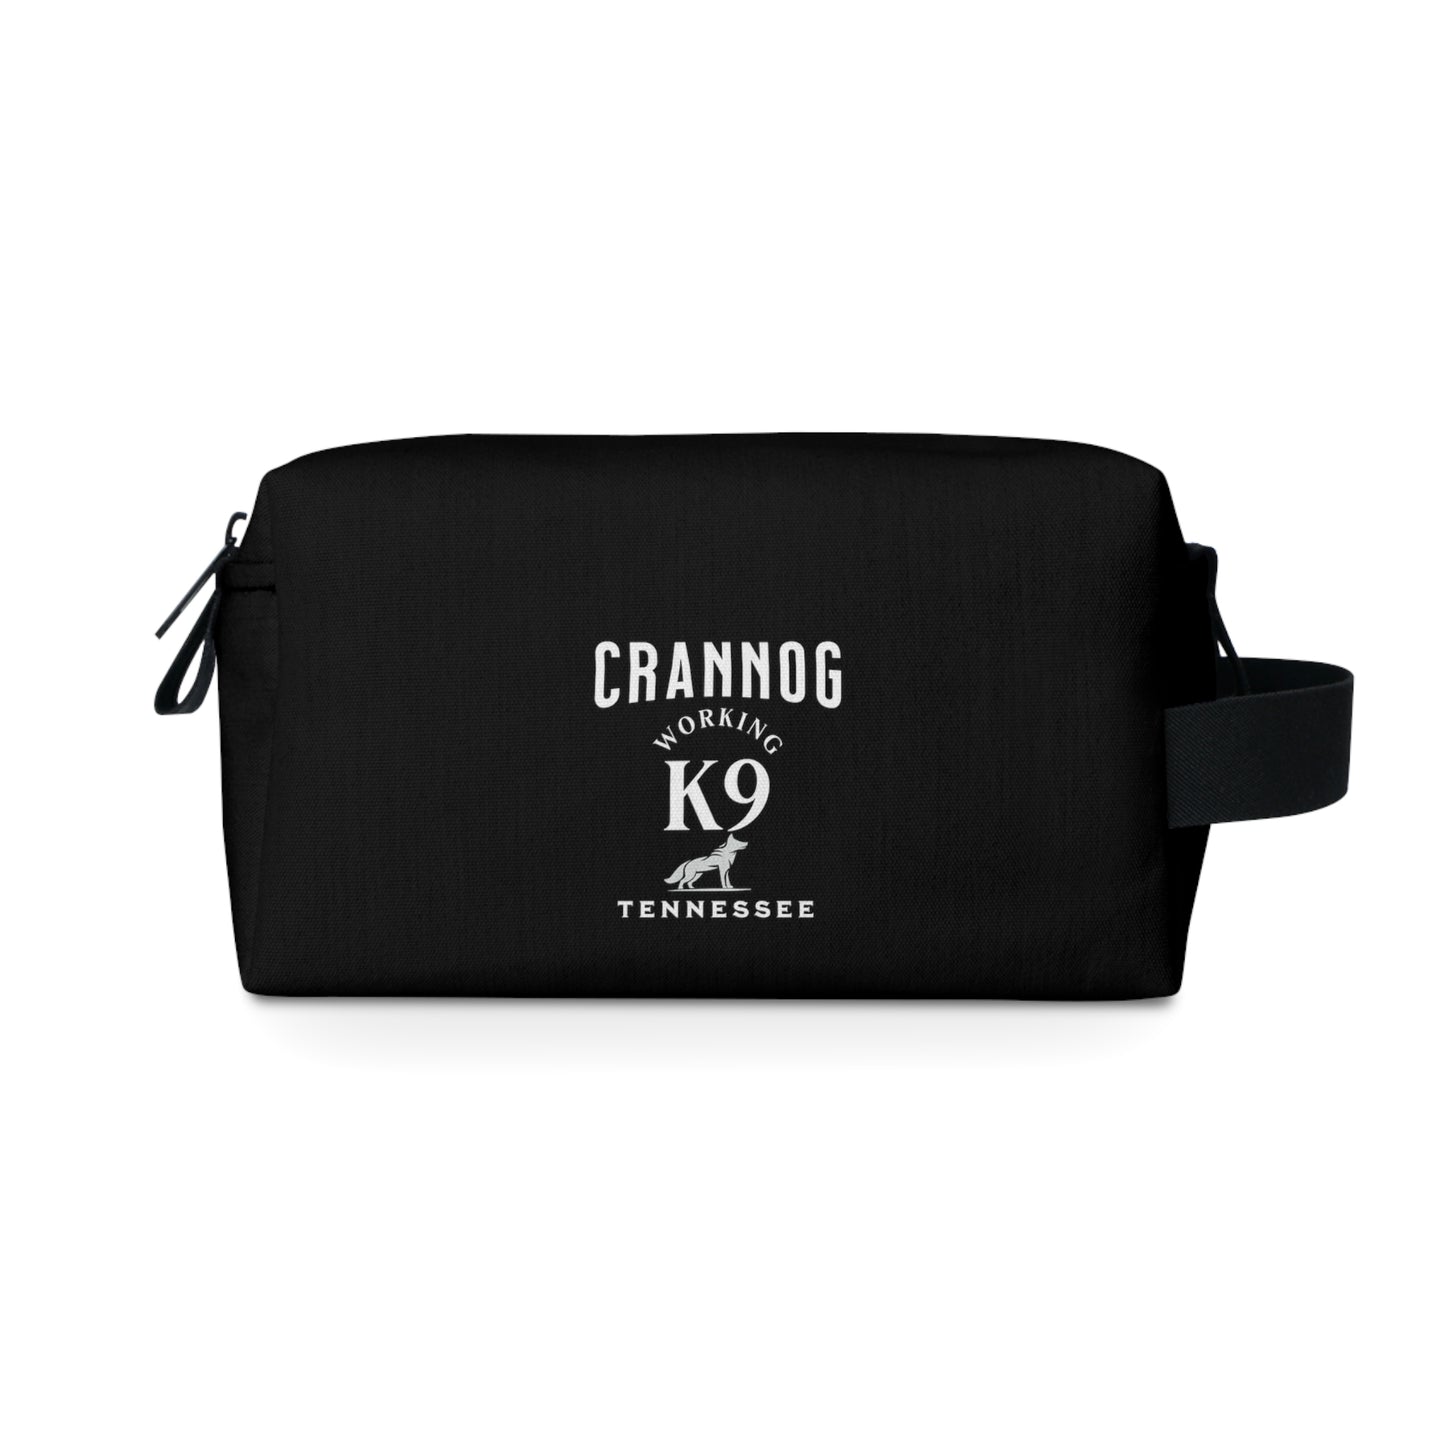 Crannog WK9 Travel Bag, Black